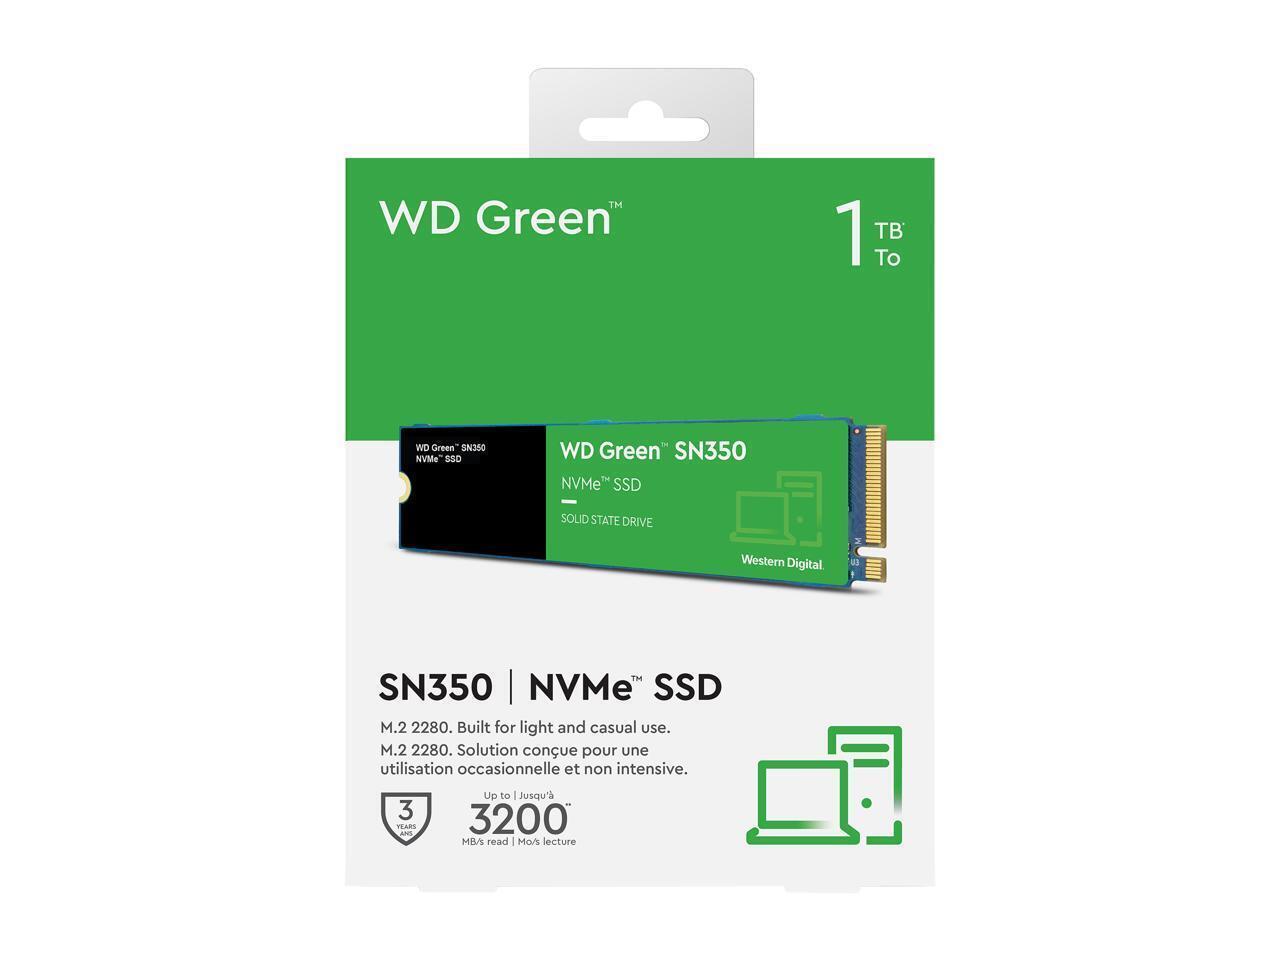 Western Digital WD Green SN350 NVMe M.2 2280 1TB Internal SSD